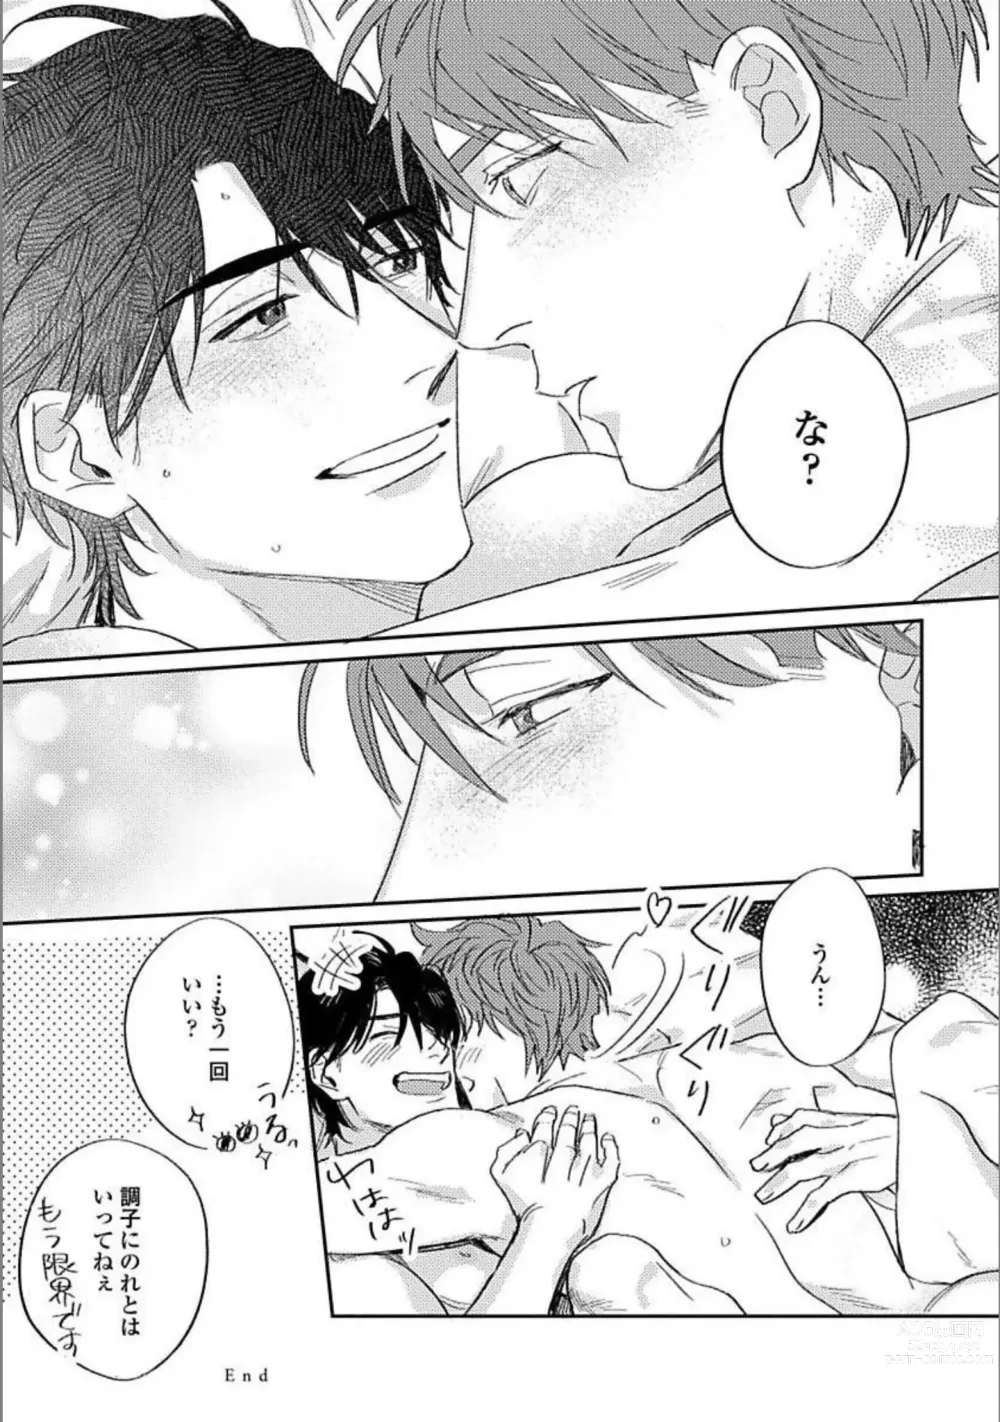 Page 208 of manga Hitori de Yoru wa Koerarenai - I Cant Stand Another Night Alone